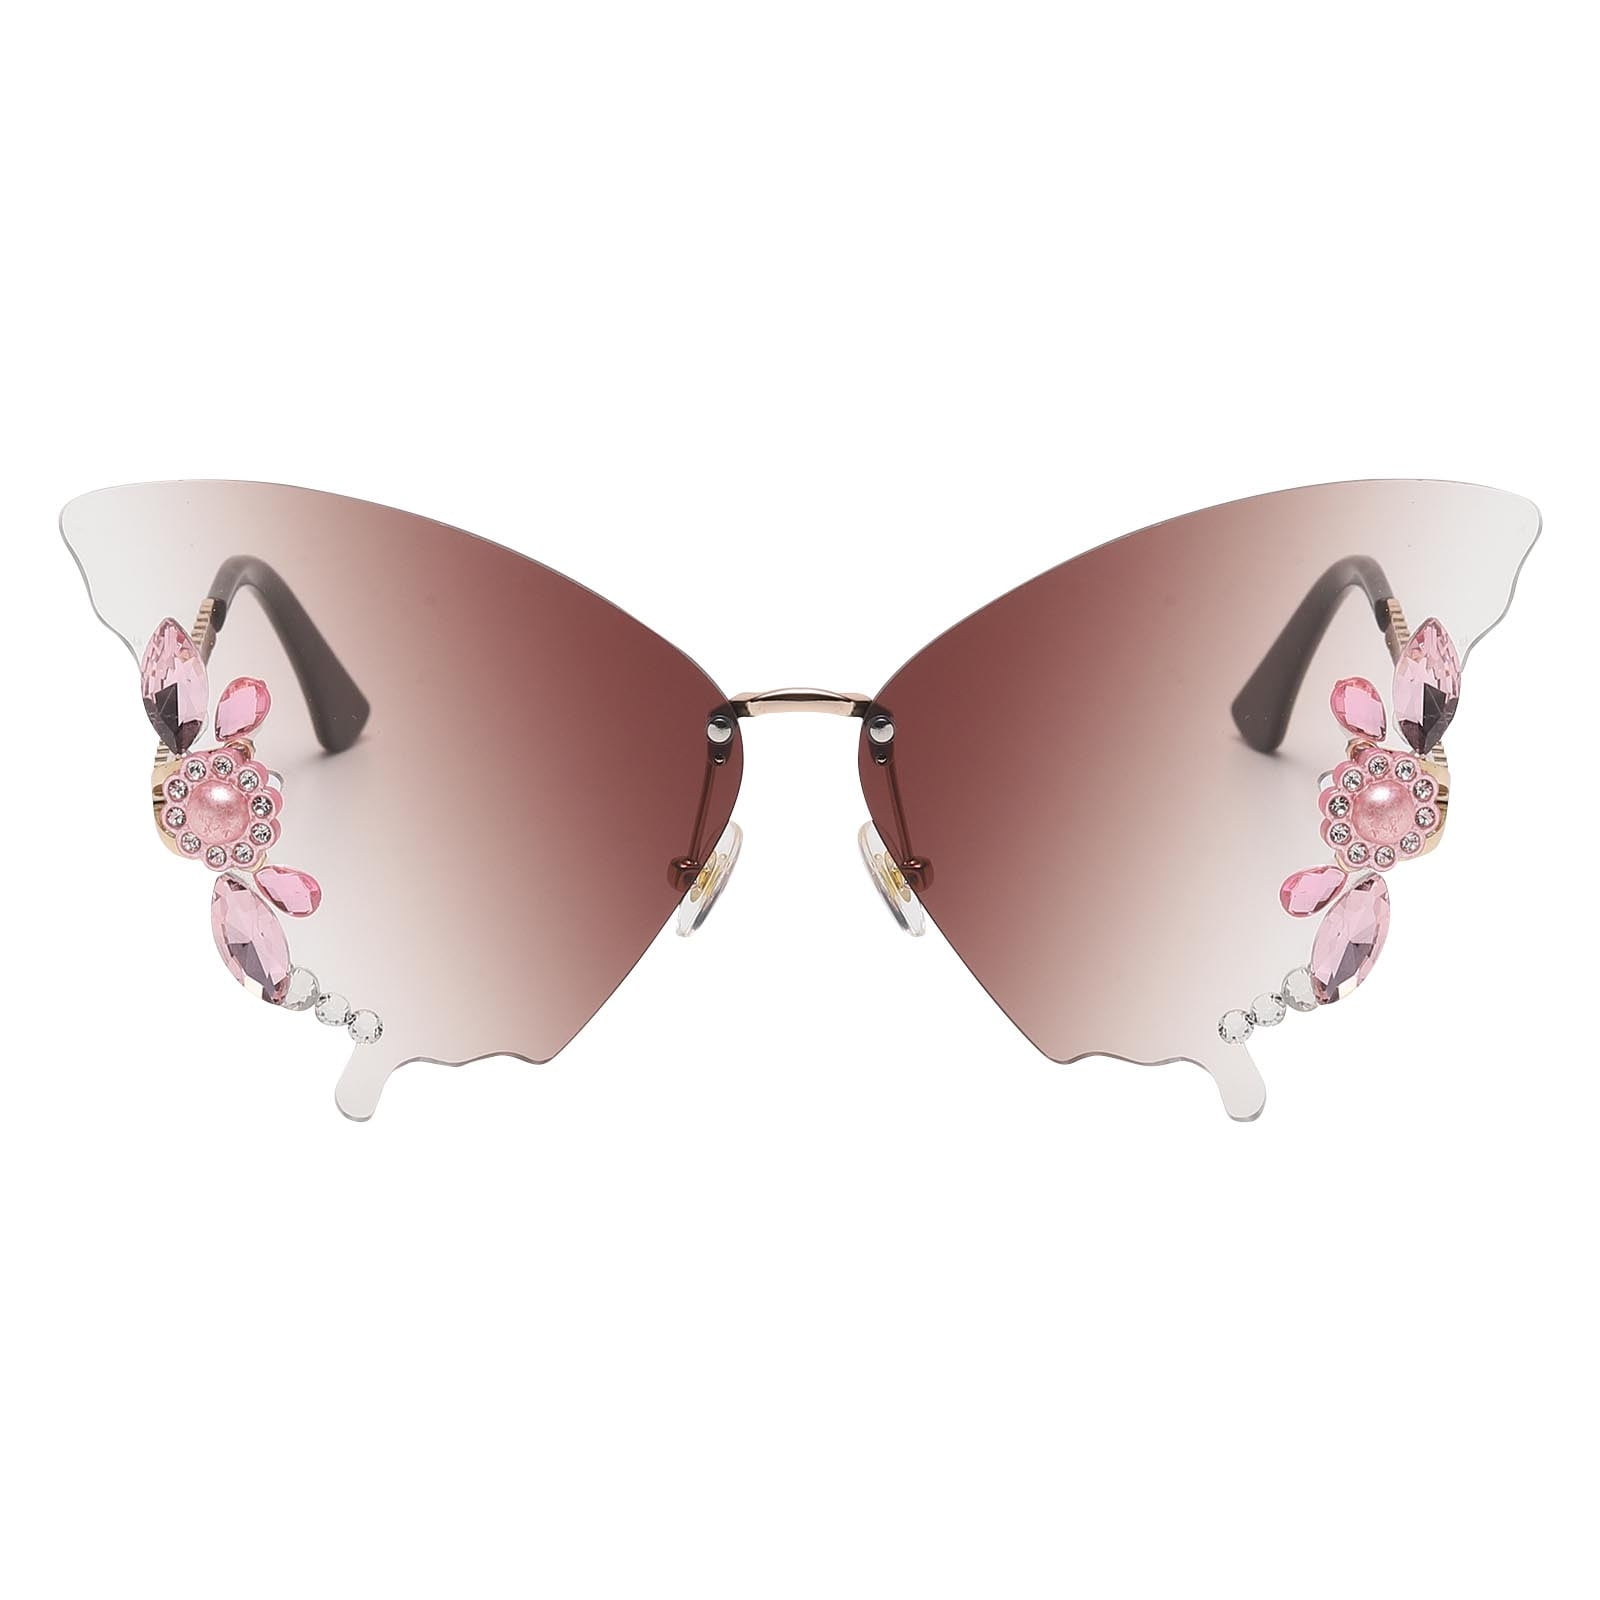 Qisiwole Women's Butterfly Rimless Sunglasses